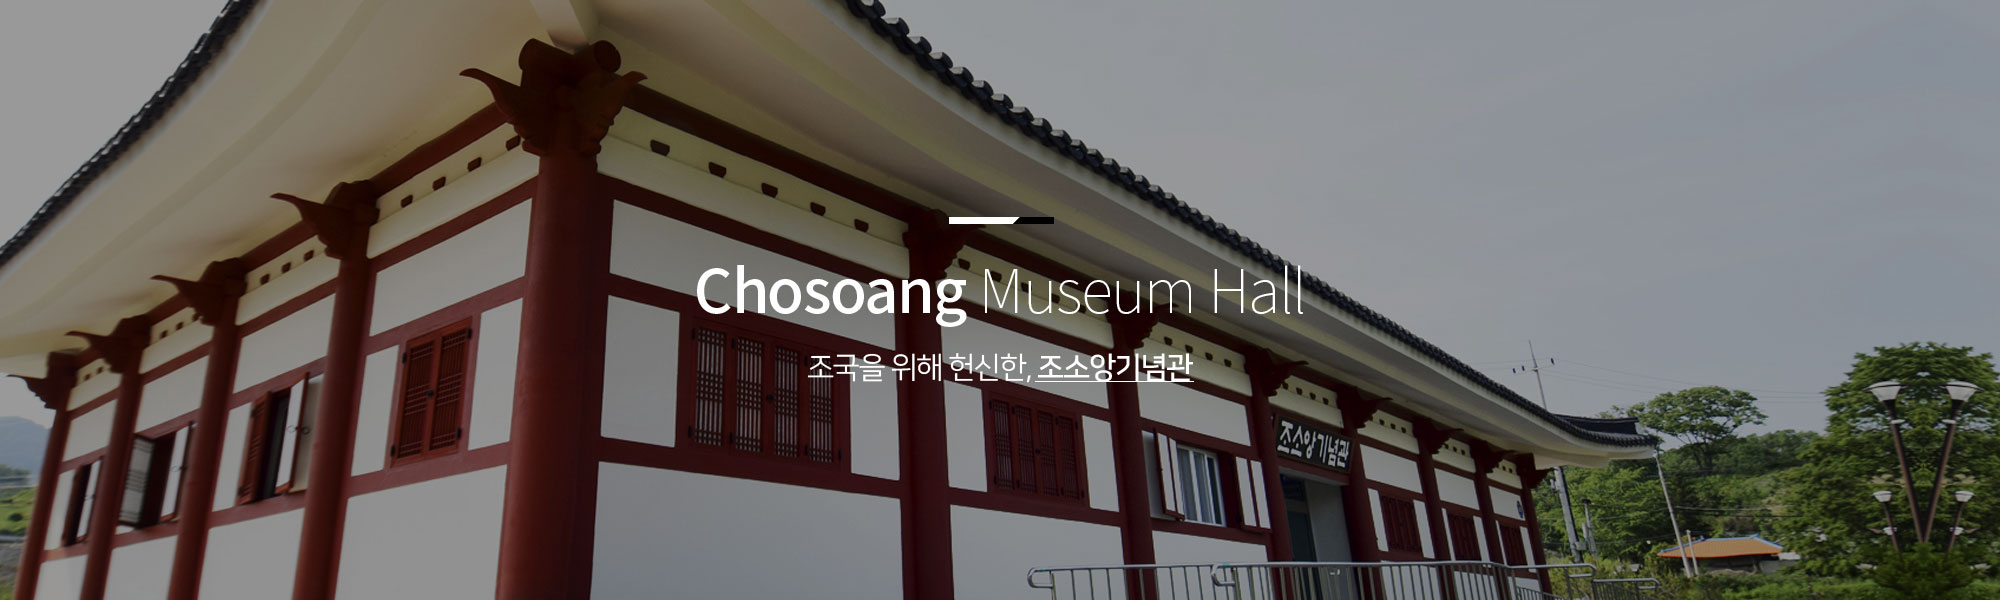 Chosoang Museum Hall 조국을 위해 헌신한, 조소앙기념관